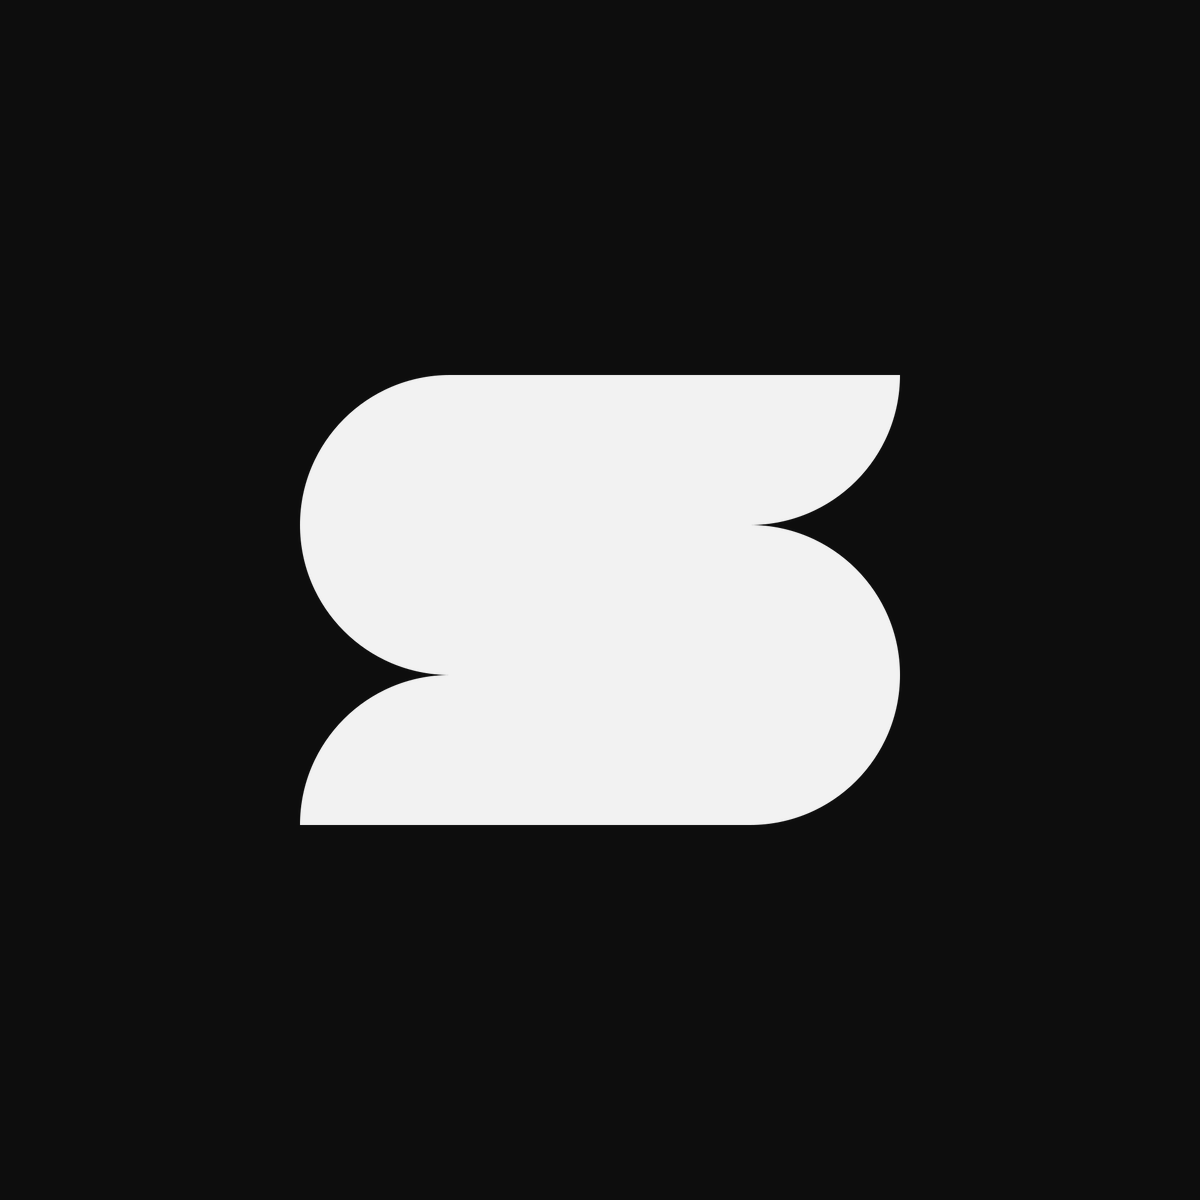 s monogram logo

#MonogramDesign #LogoInspiration #BrandIdentity #CreativeDesign #GraphicDesign #PersonalizedLogo #CustomLogo #LogoDesigner #InitialsLogo #UniqueLogo